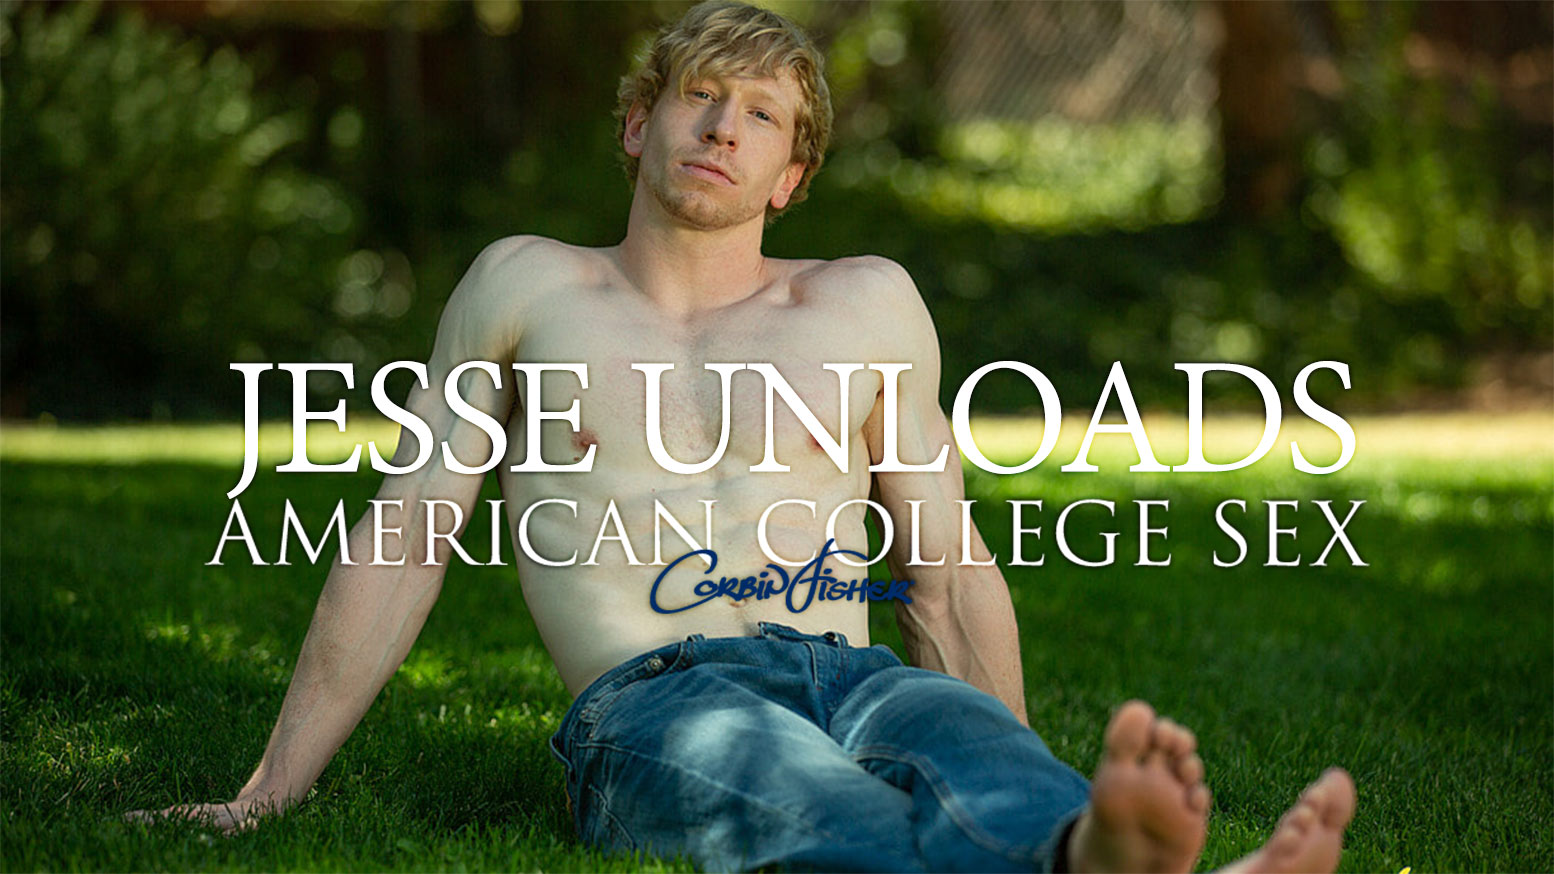 American College Sex Jesse Unloads